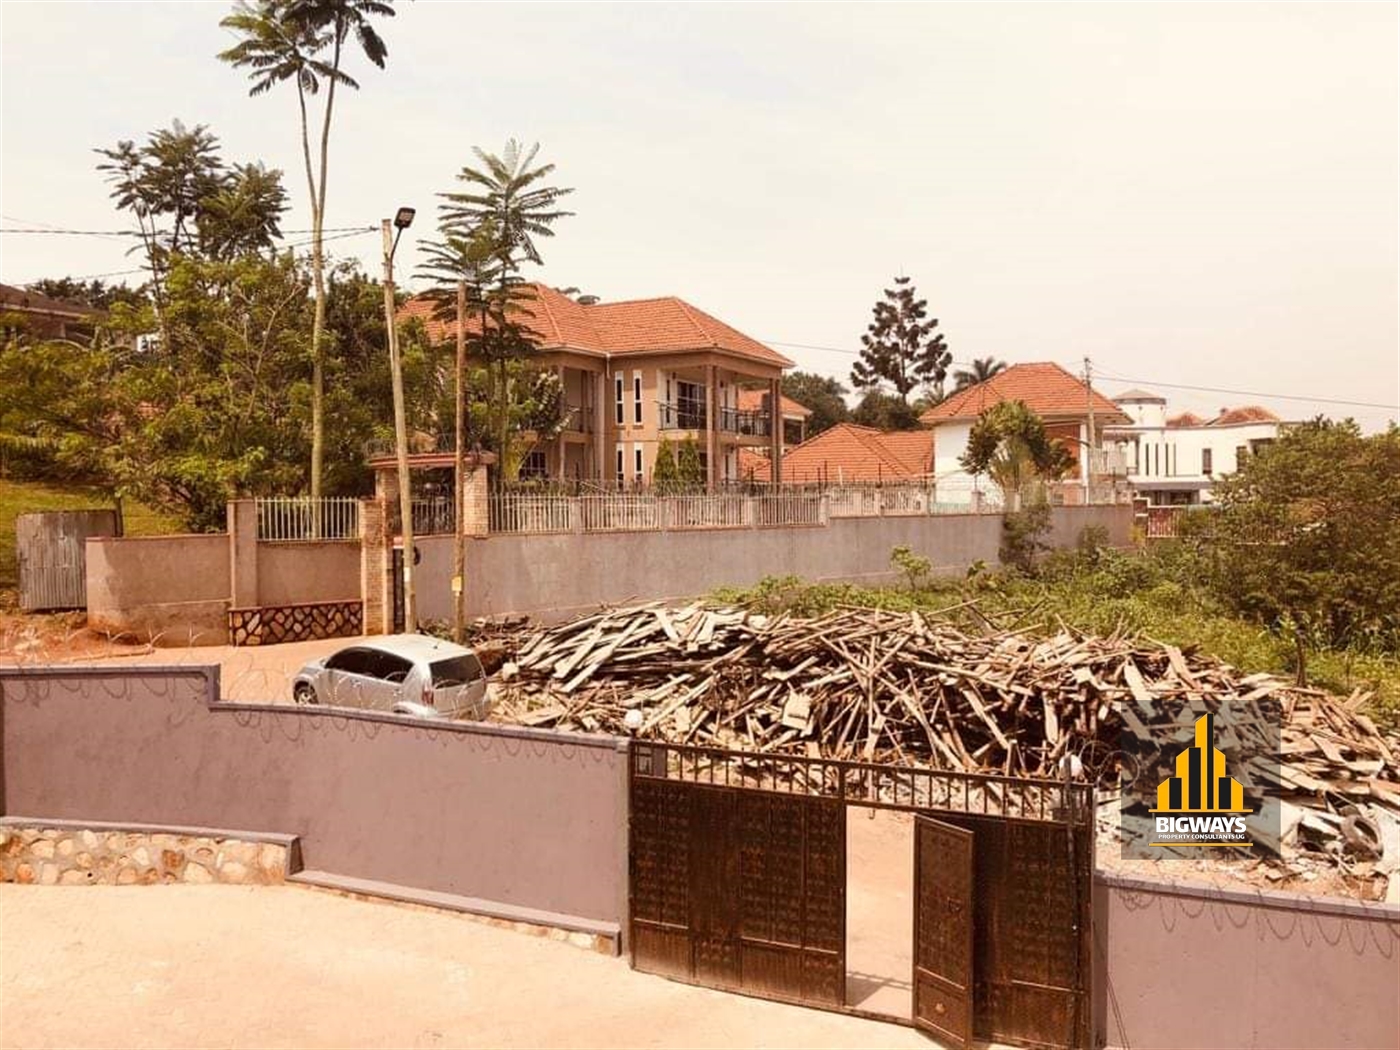 Apartment block for sale in Makindye Kampala